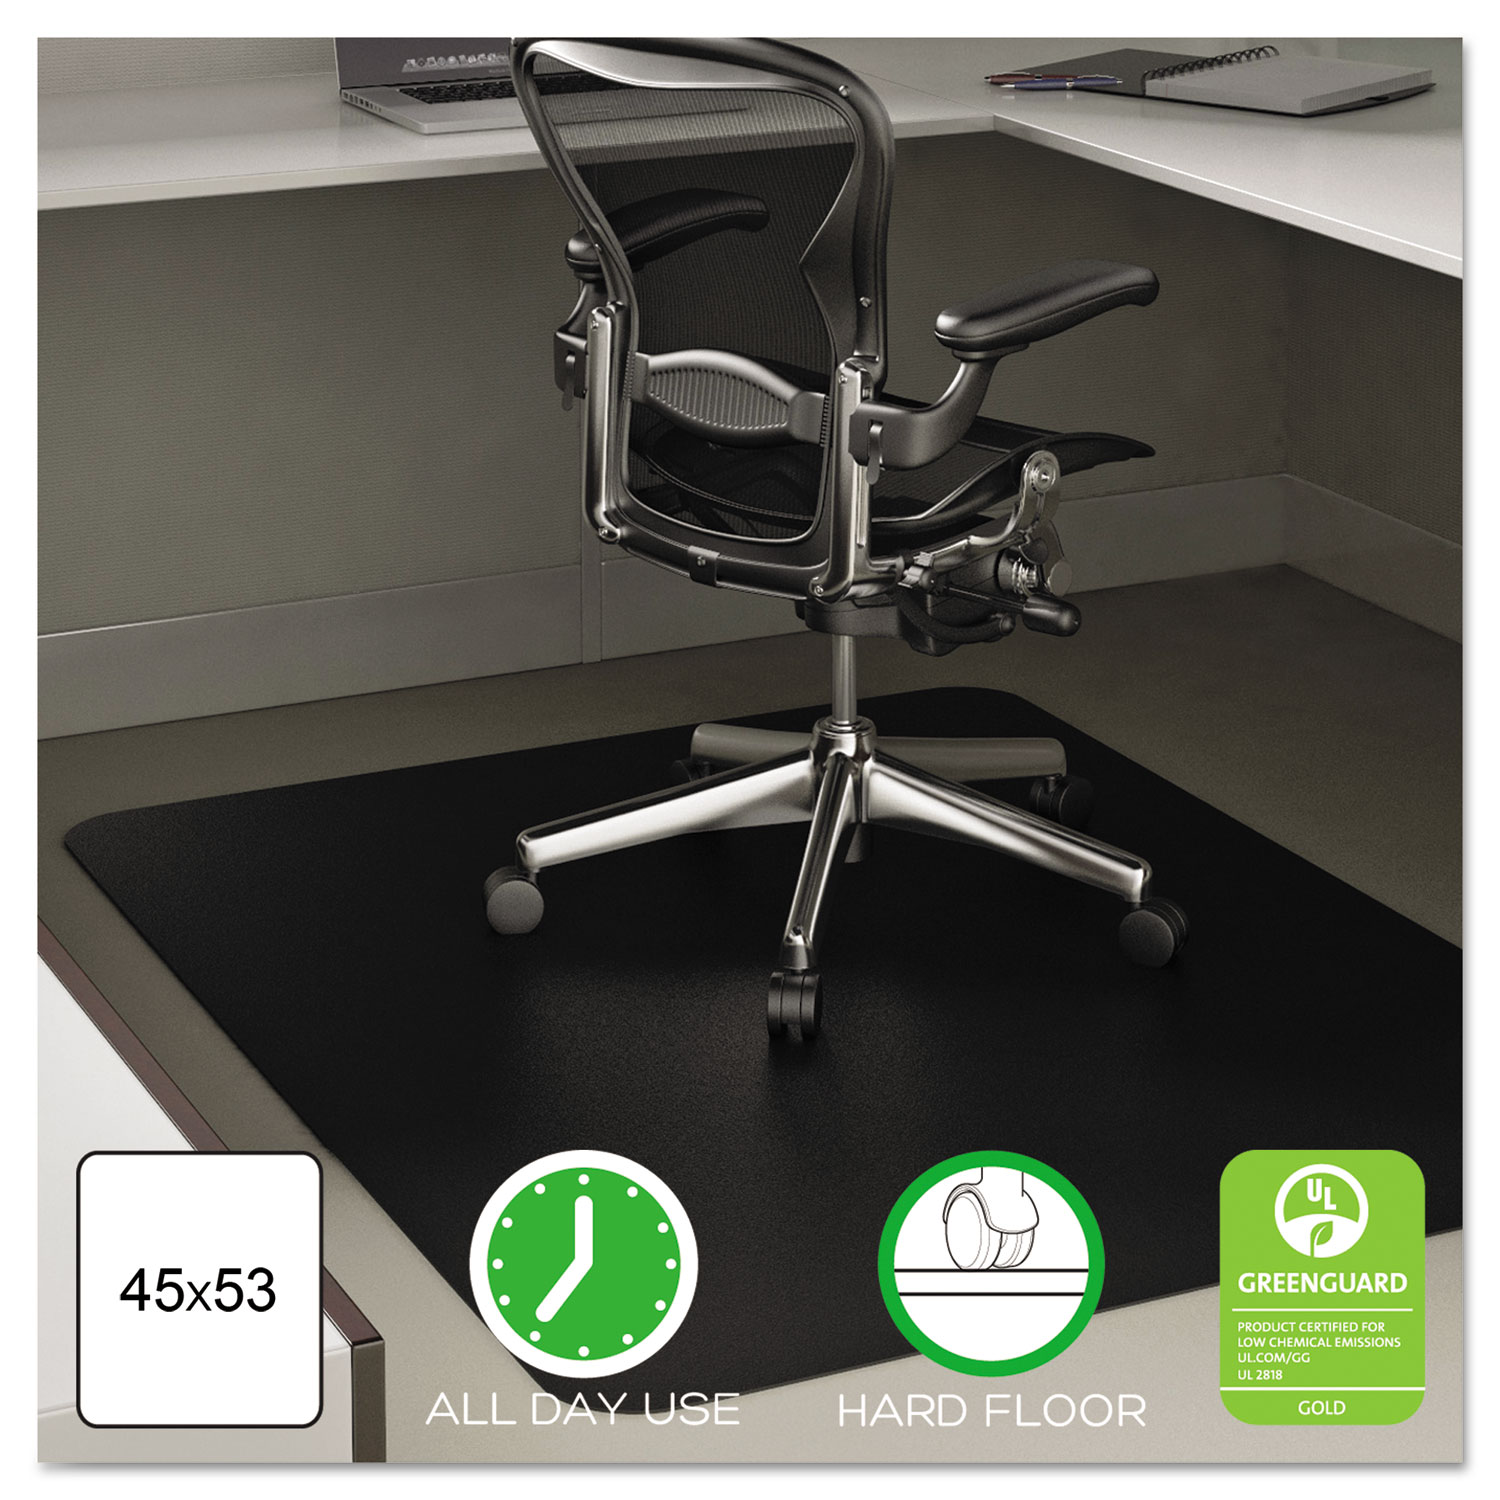  deflecto CM21242BLK EconoMat All Day Use Chair Mat for Hard Floors, 45 x 53, Rectangular, Black (DEFCM21242BLK) 